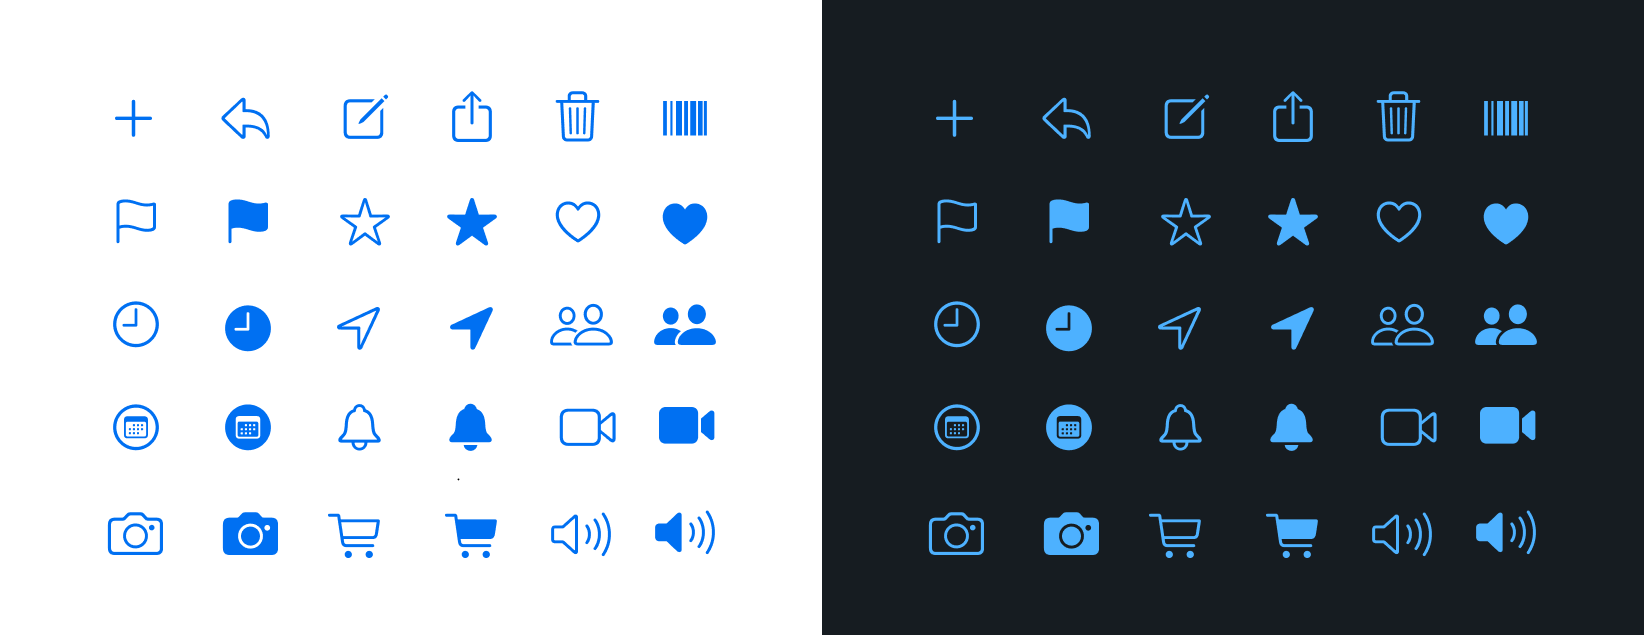 SAP Fiori for iOS icons in Light Mode